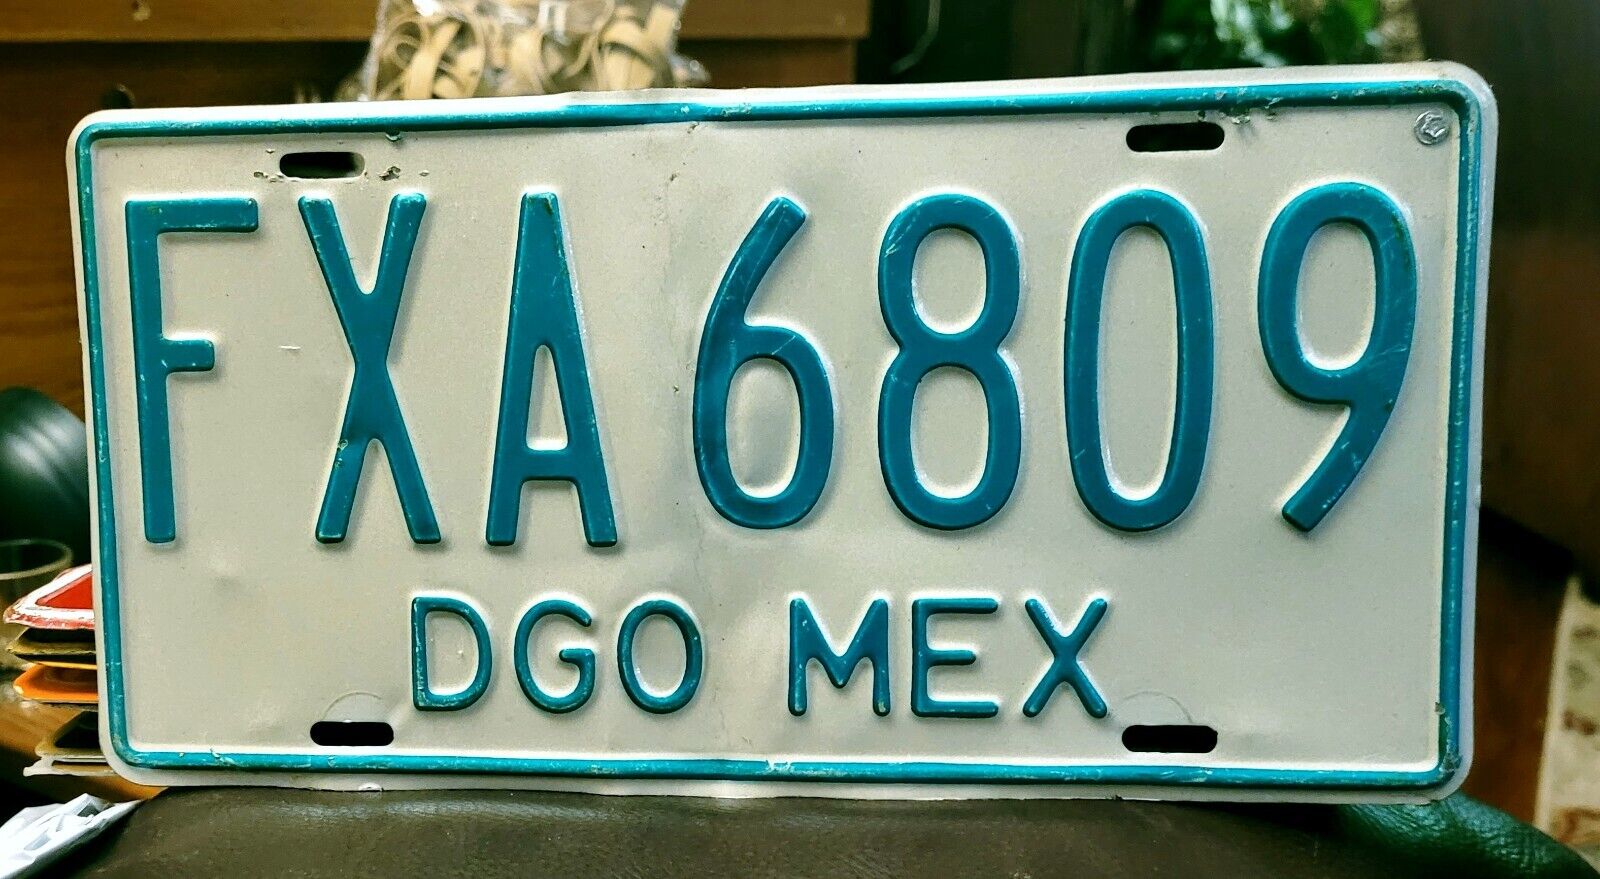 🌎 - MEXICO - 1992 passenger license plate - original Durango state. 